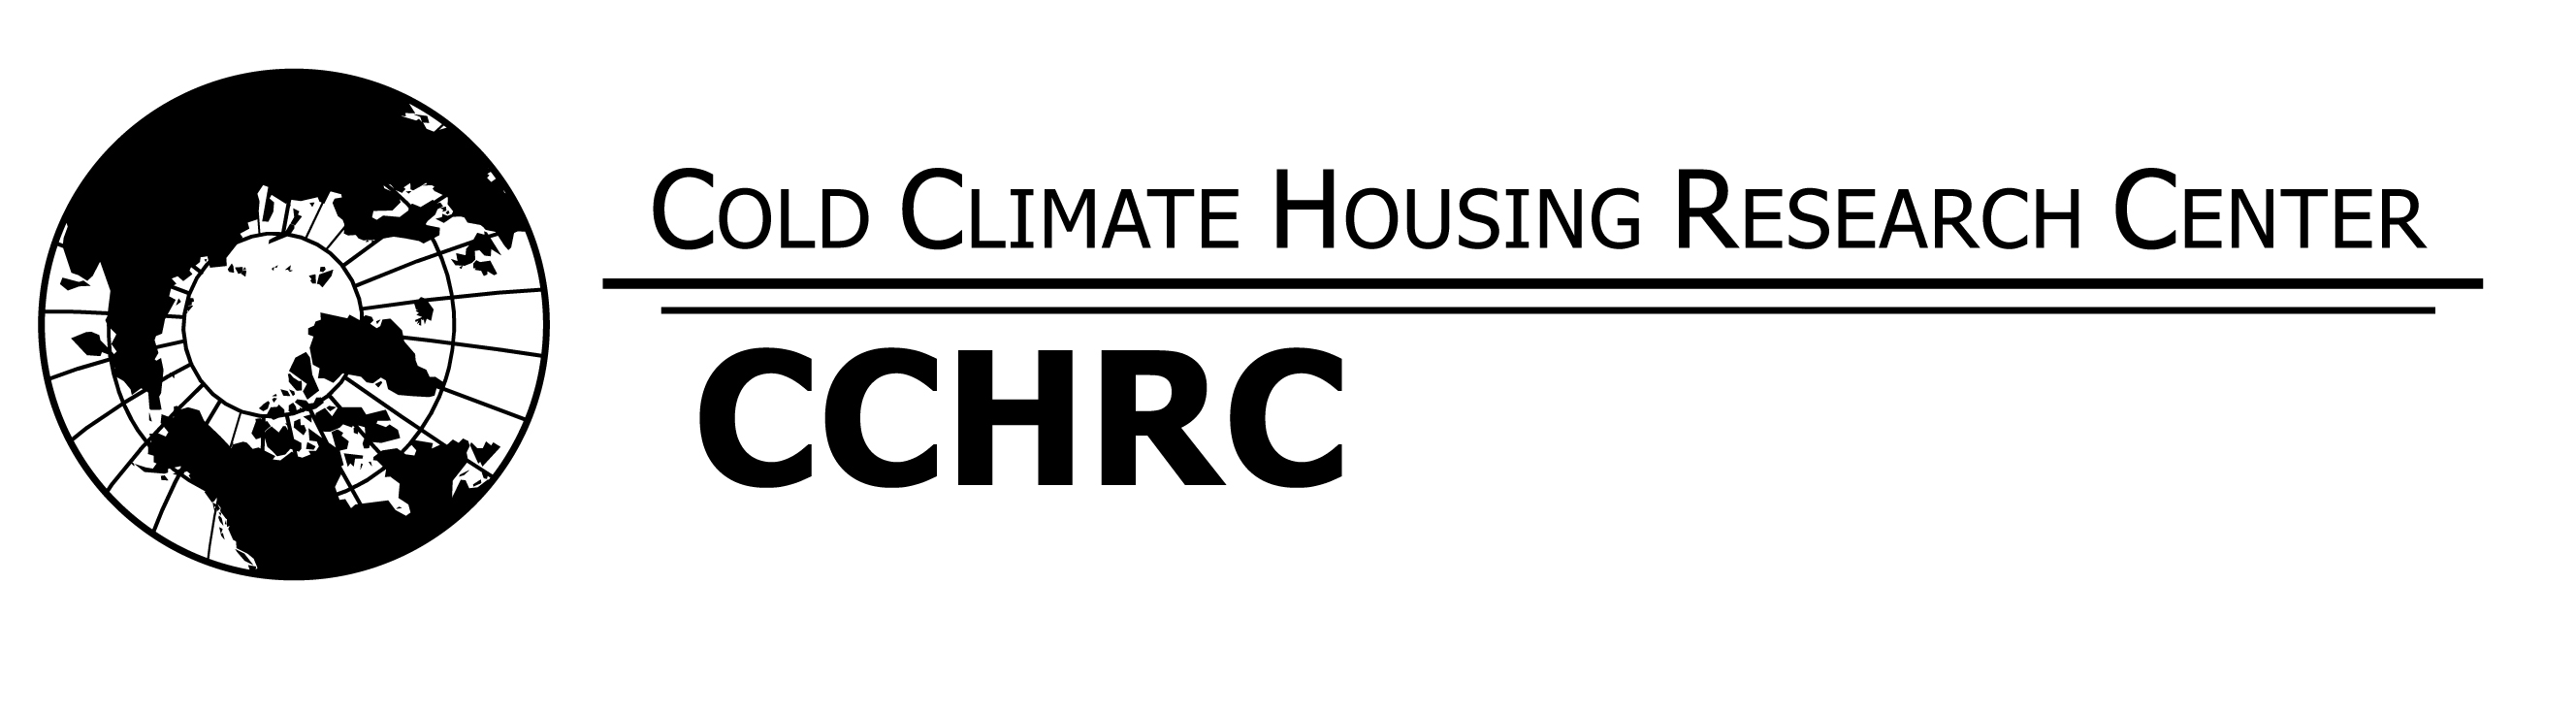 cchrc-logo-black_transparent